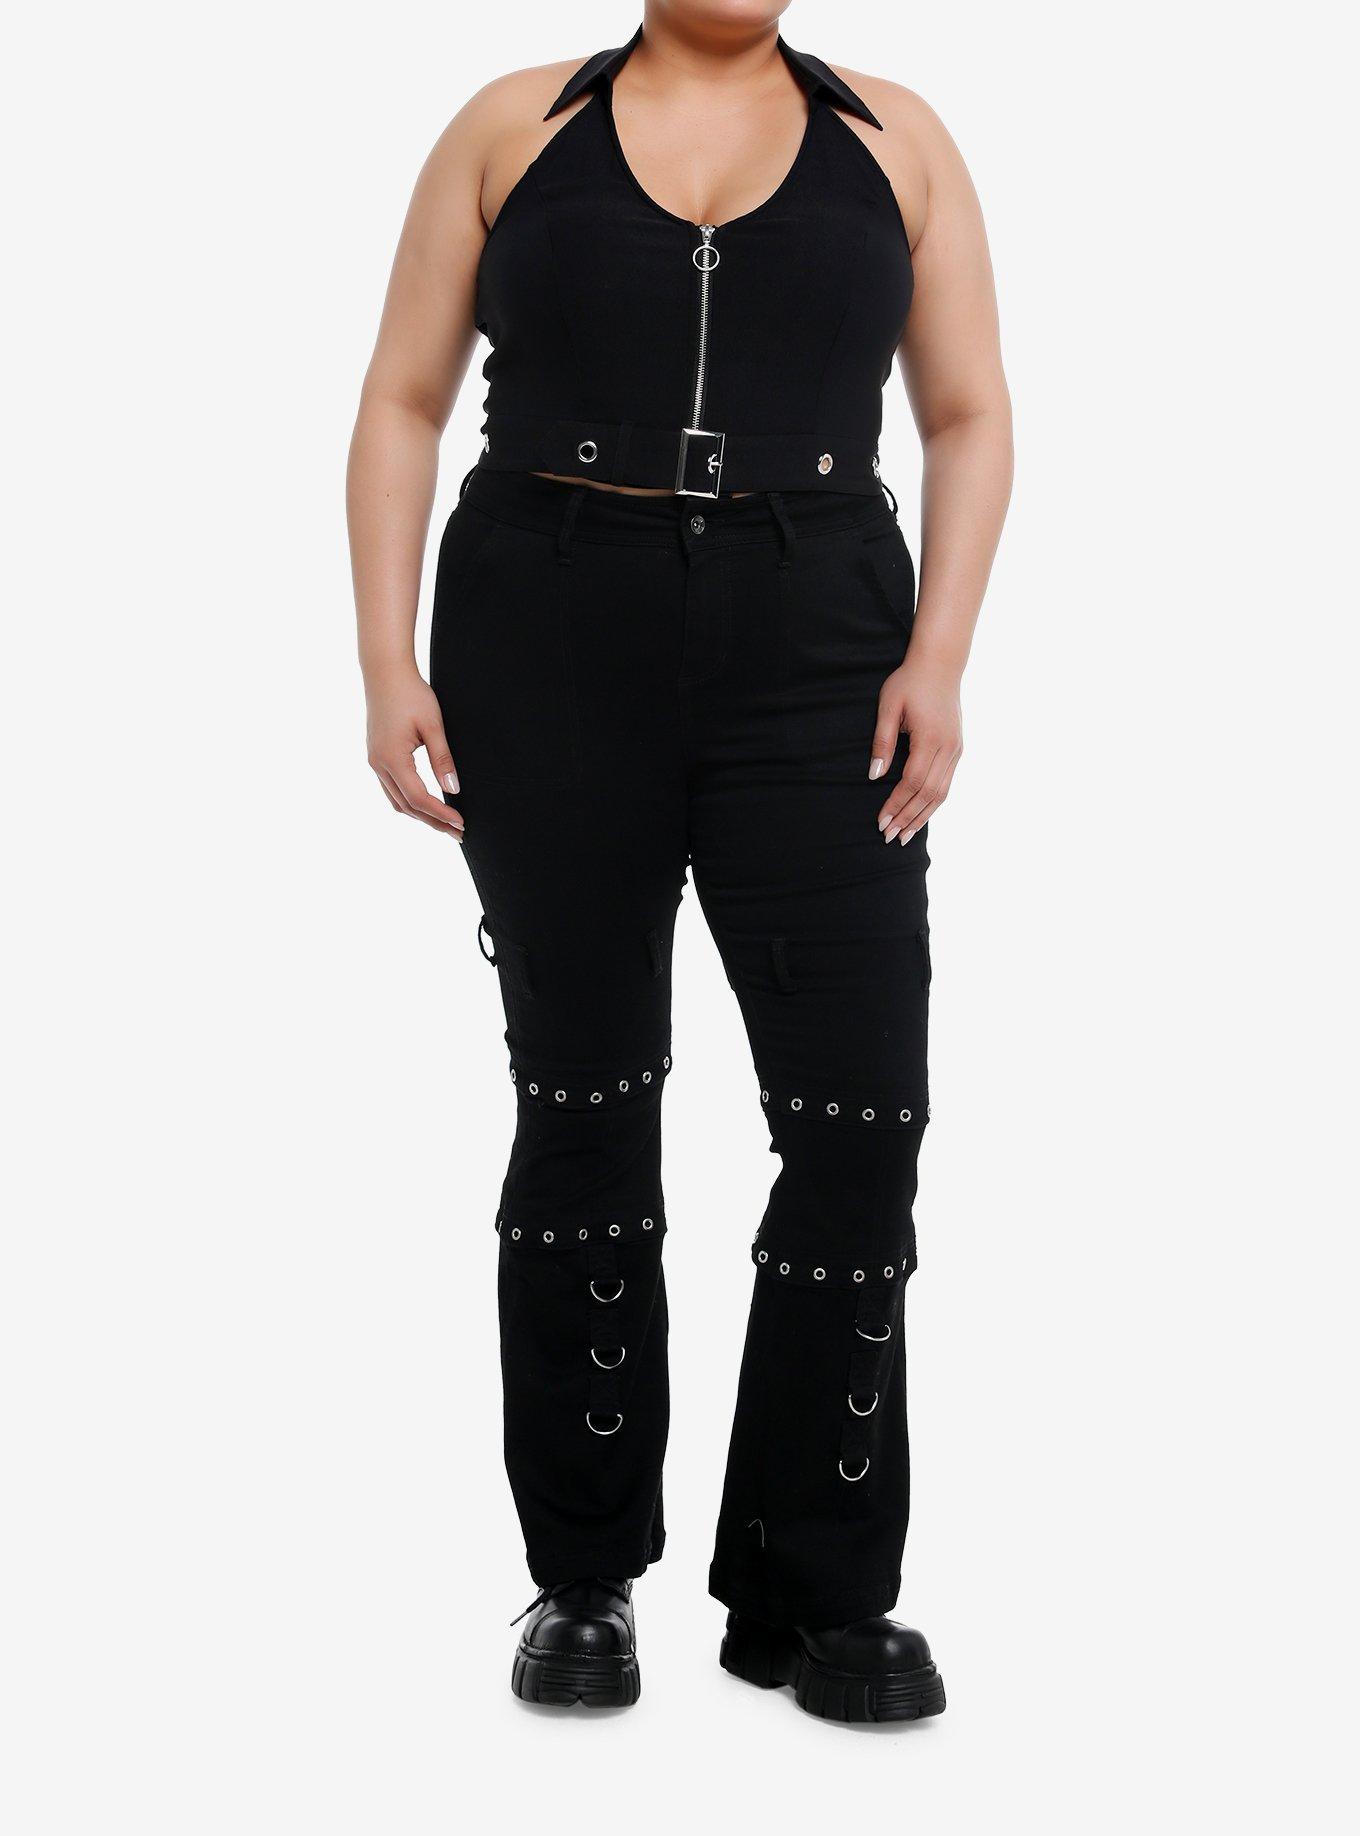 Social Collision Collar Belt Halter Girls Crop Tank Top Plus Size, BLACK, alternate